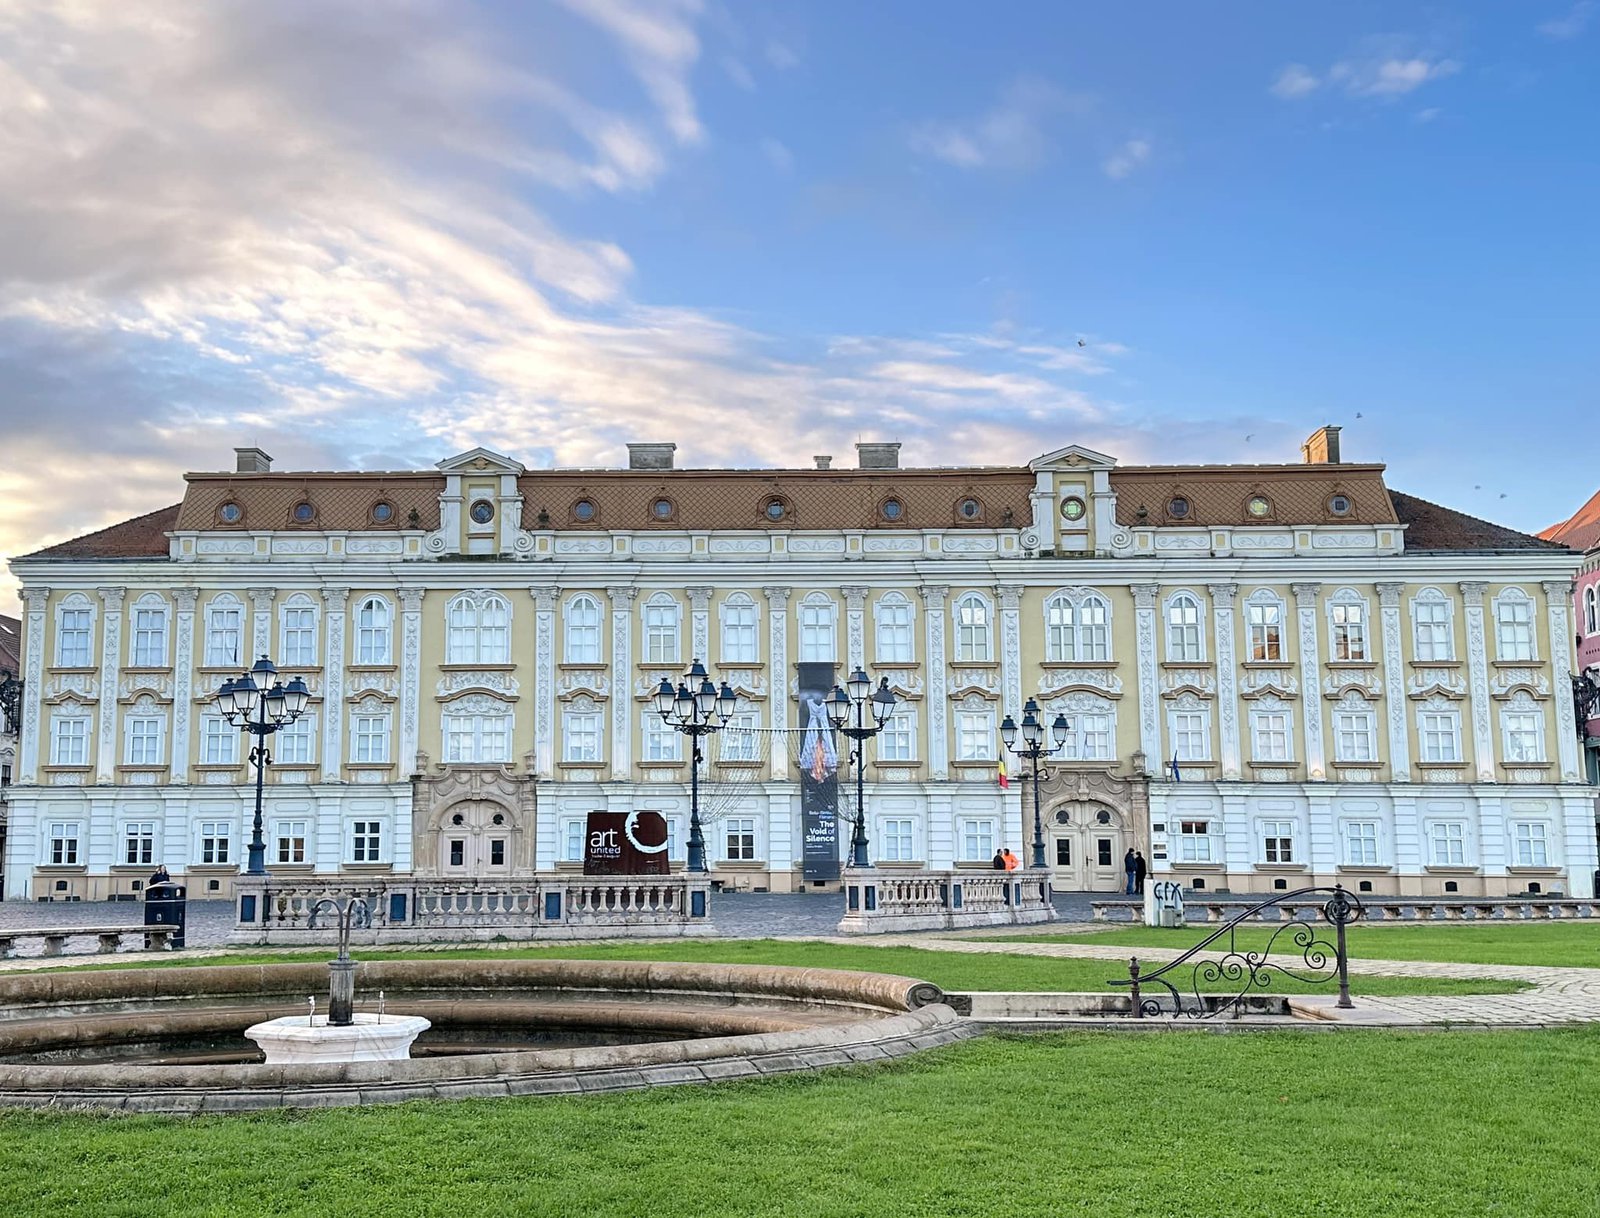 The National Art Museum of Timisoara